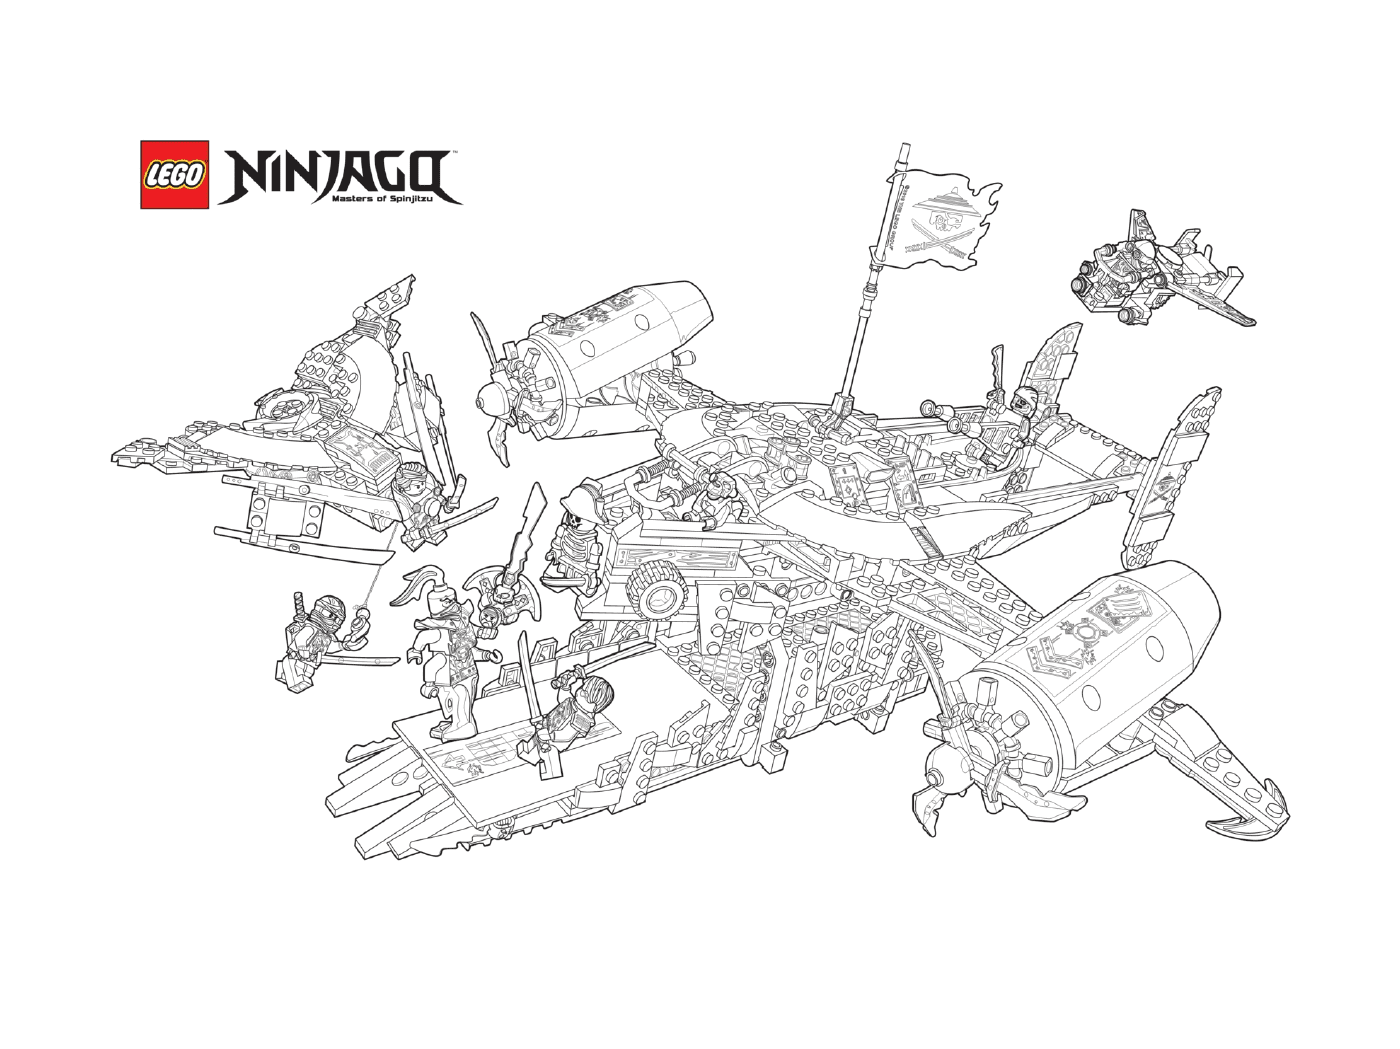   Vaisseaux avions de combat ninjago 